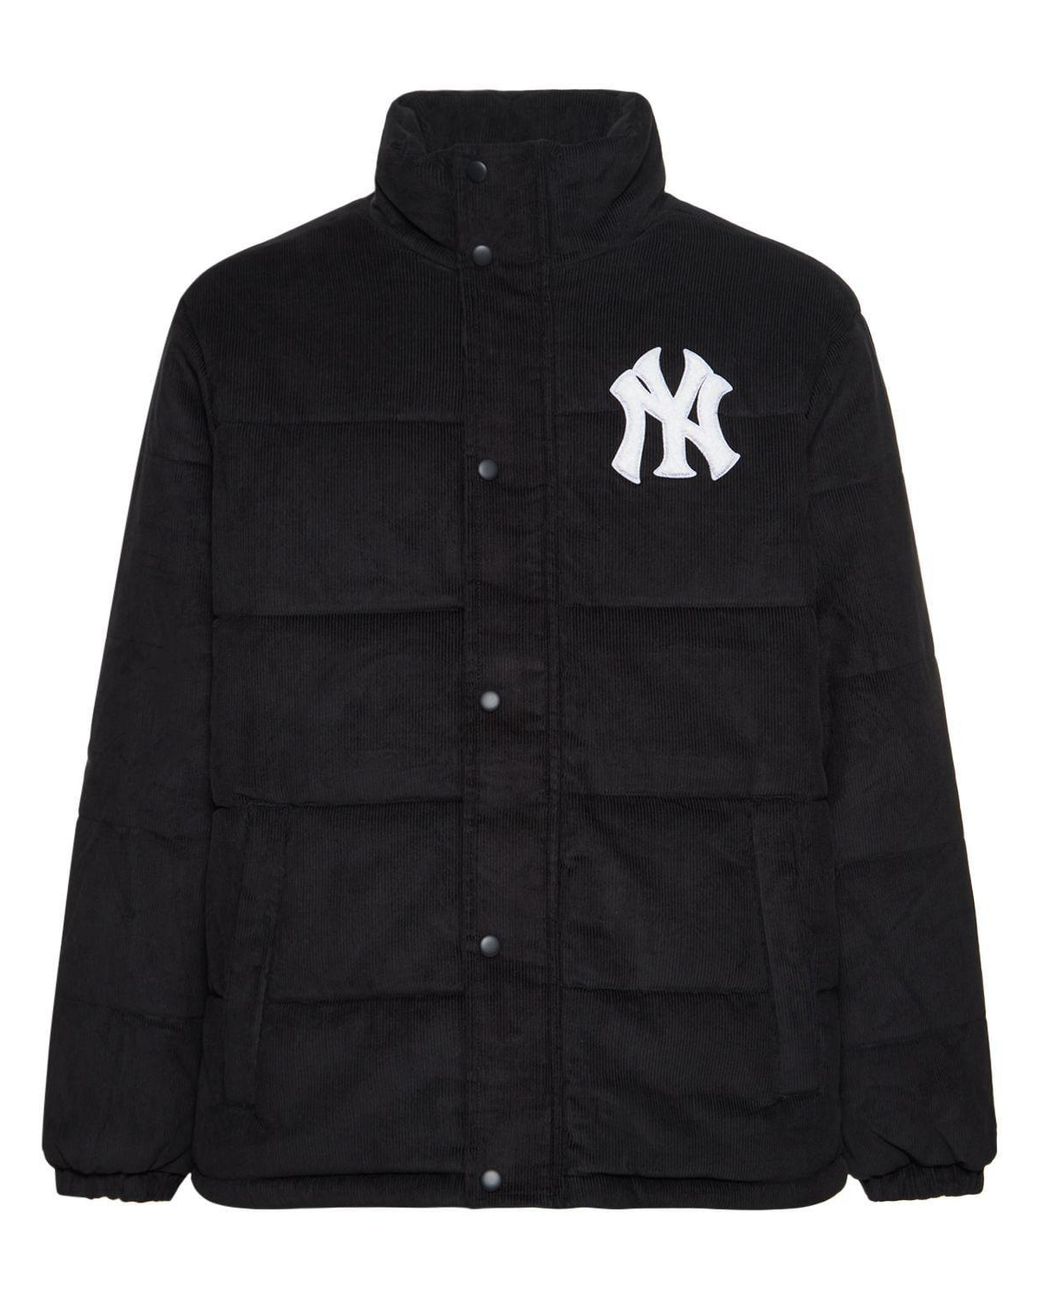 KTZ Ny Yankees Corduroy Puffer Jacket in Black for Men